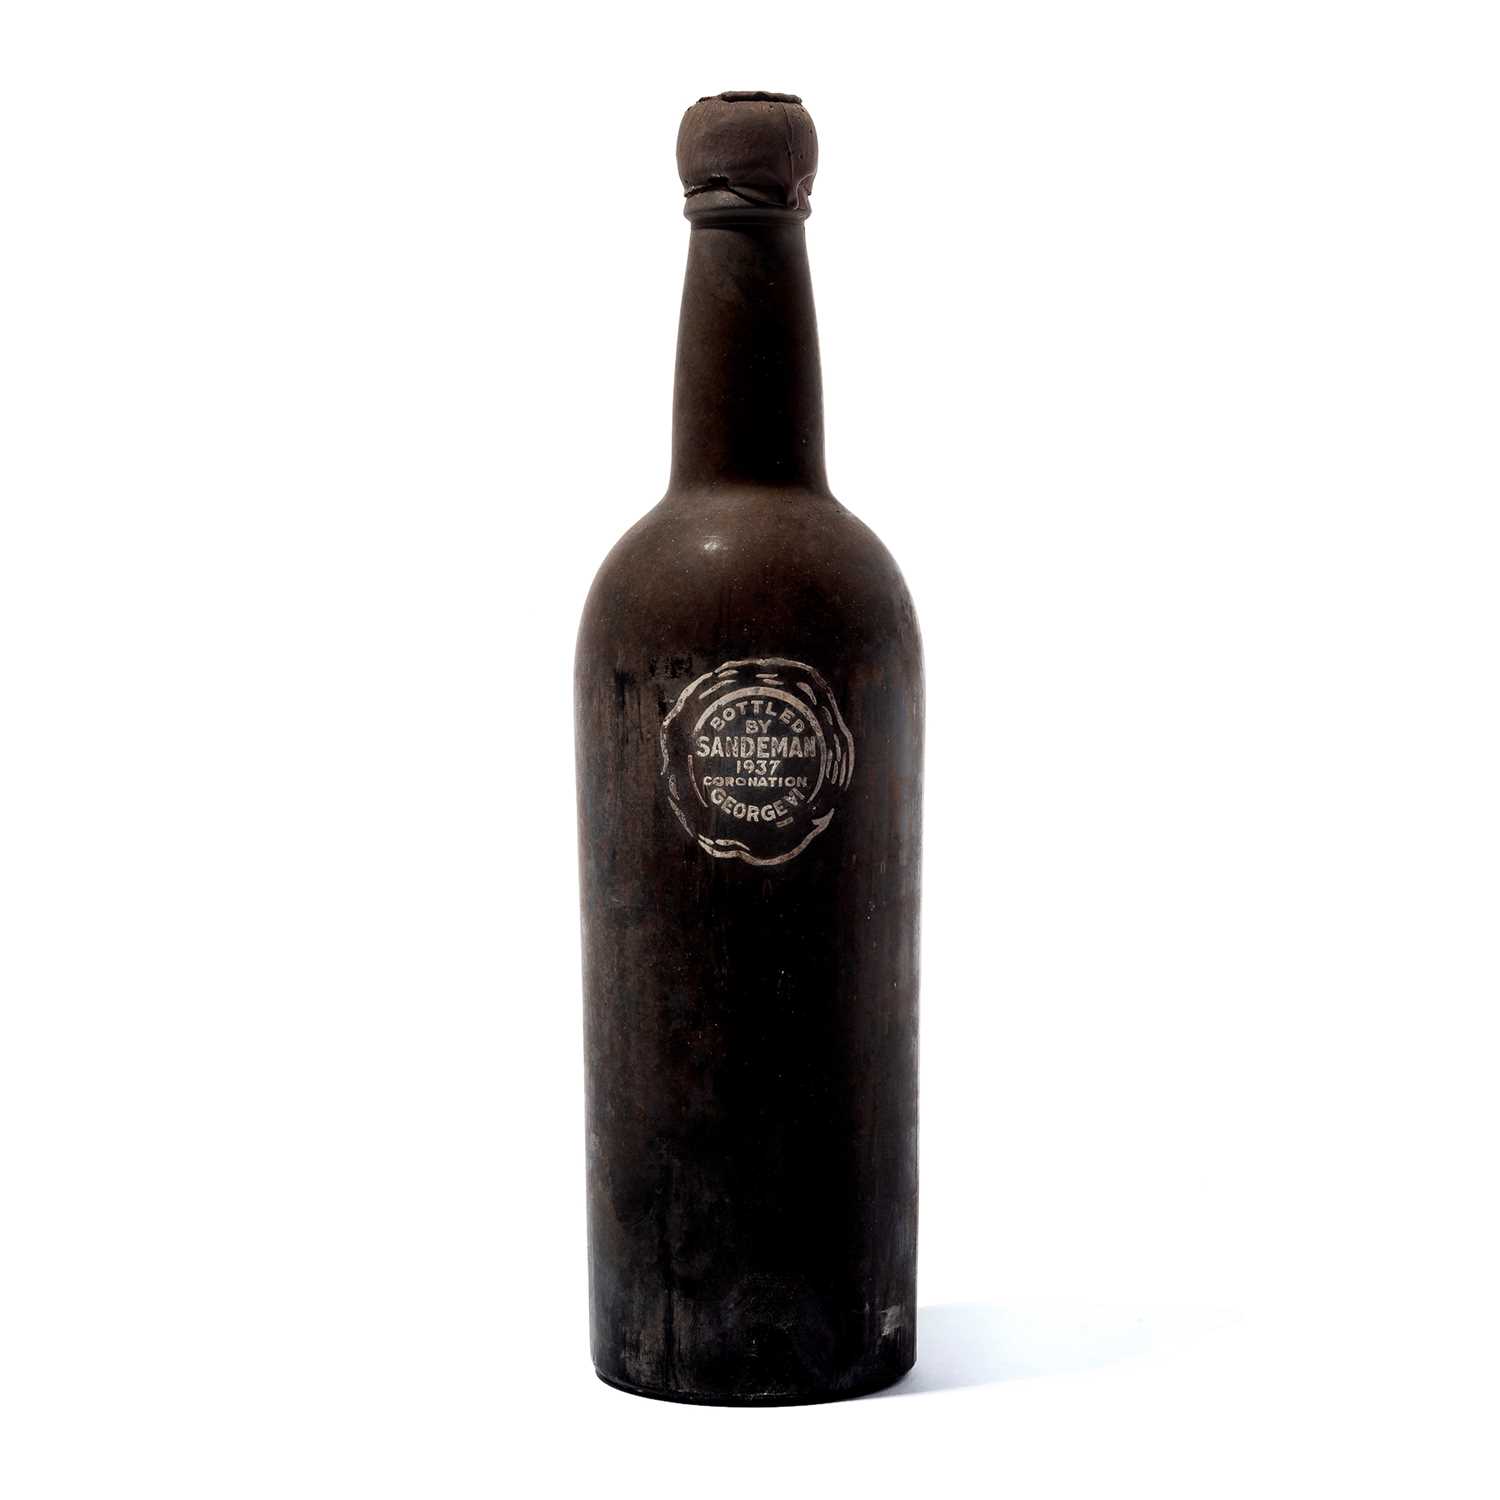 Lot 16 - 1 bottle 1935 Sandeman